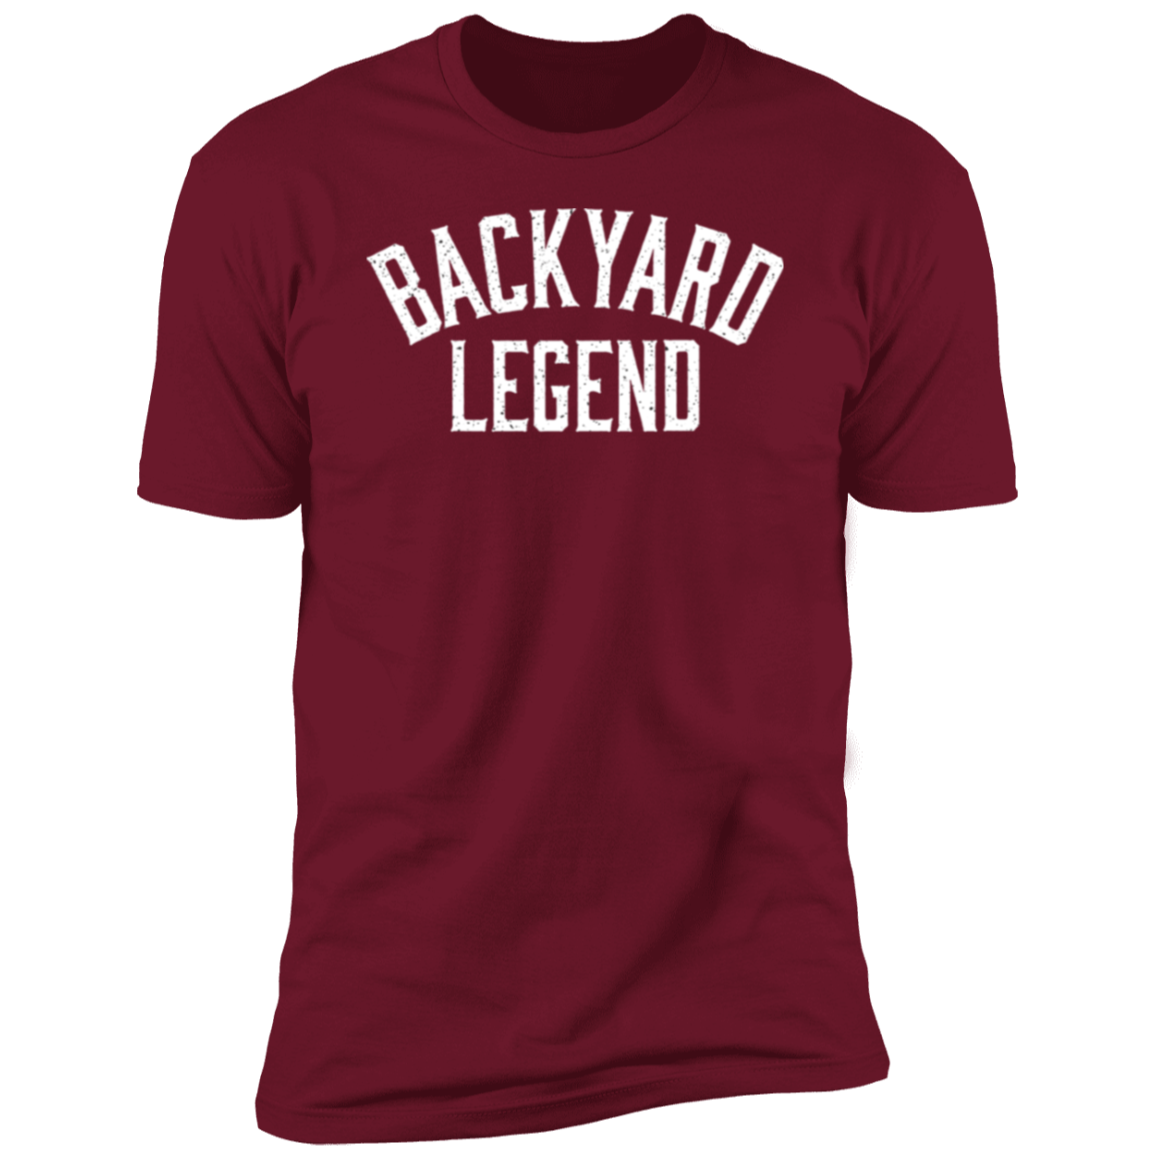 Backyard Legend Premium Men's Tee - Game Day Getup